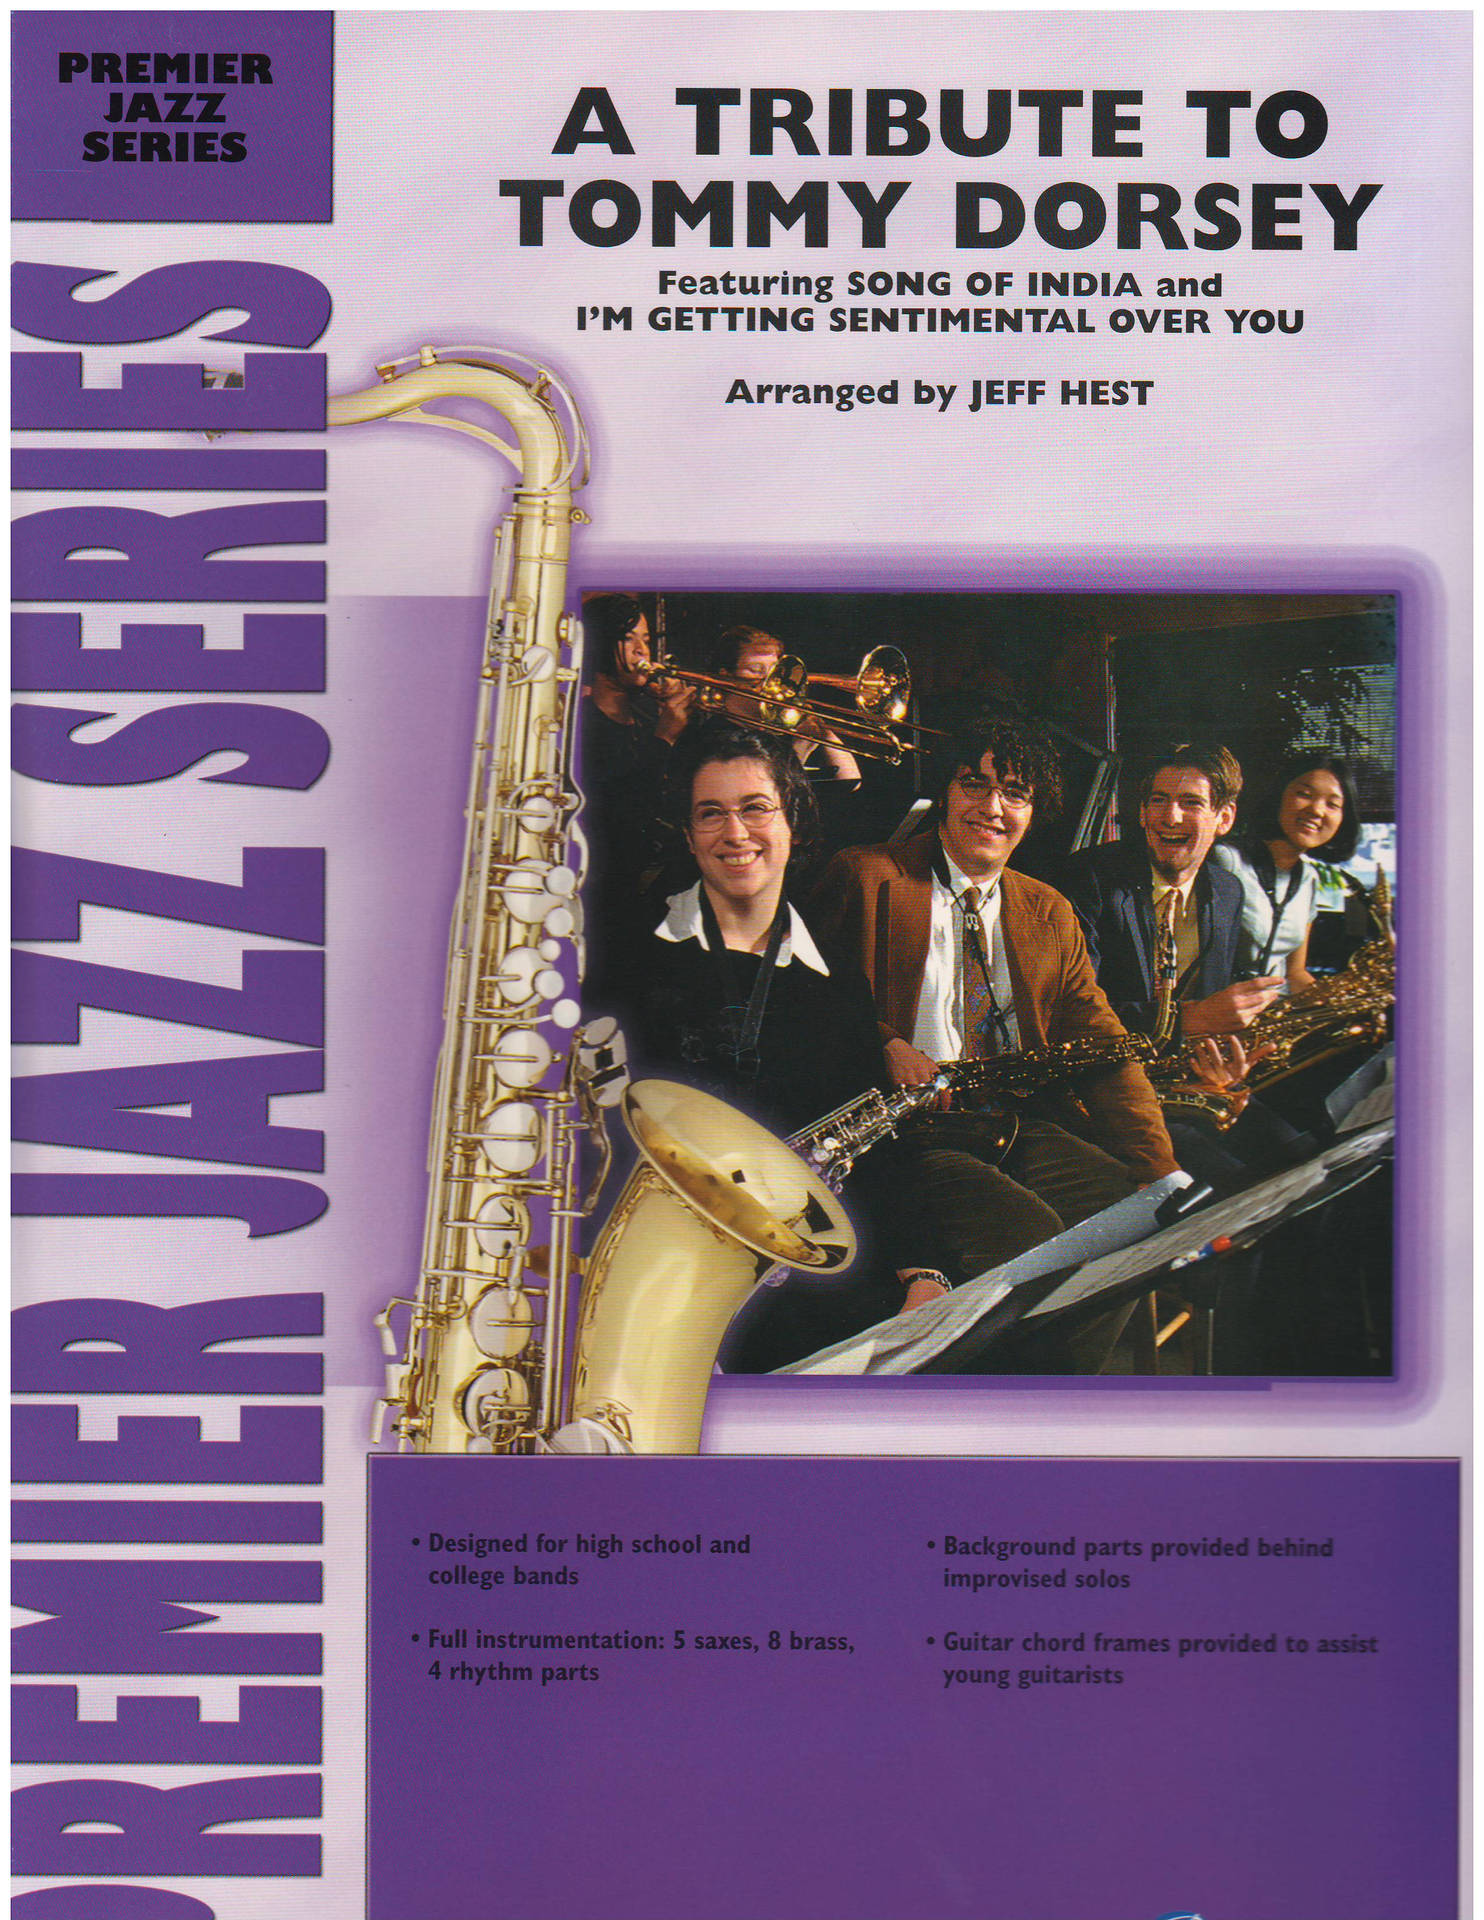 Tribute to Tommy Dorsey Album Cover Art Wallpaper